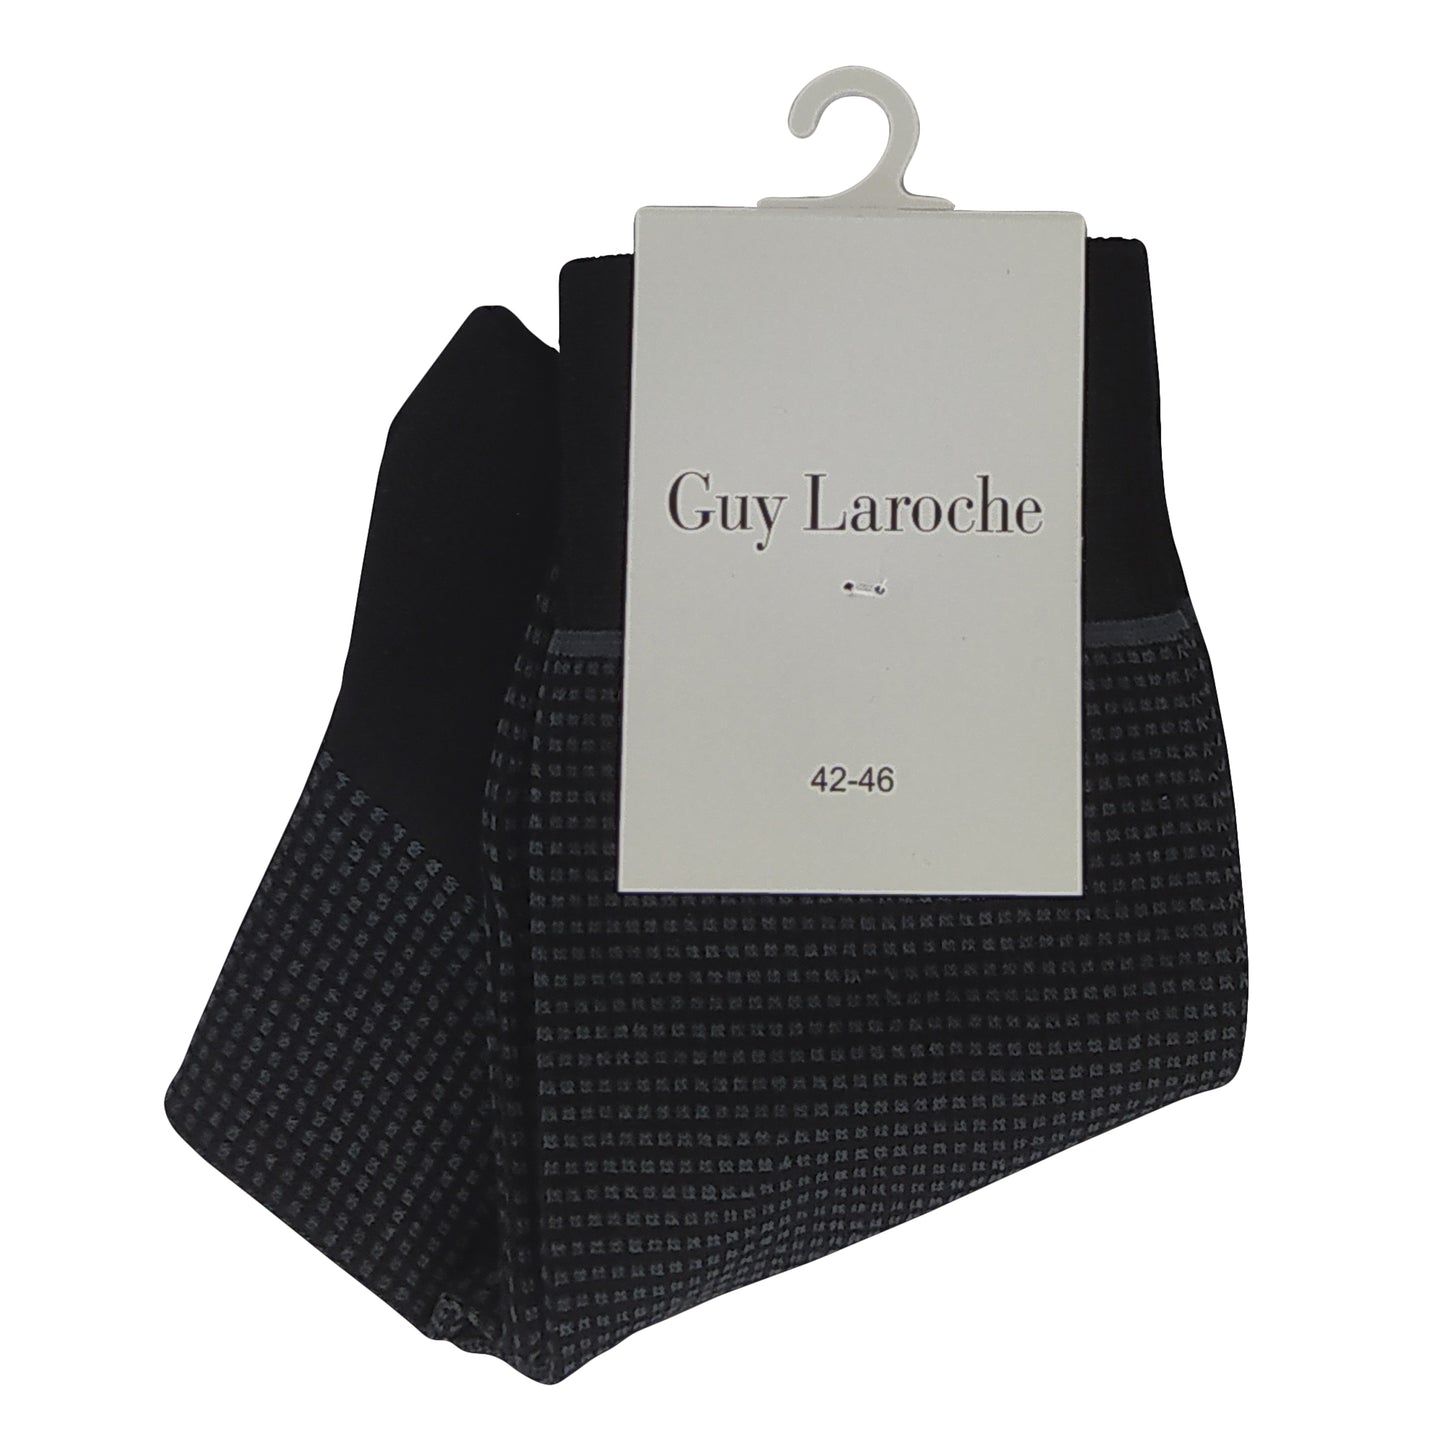 Socks Guy Laroche Gray 1820 GL G